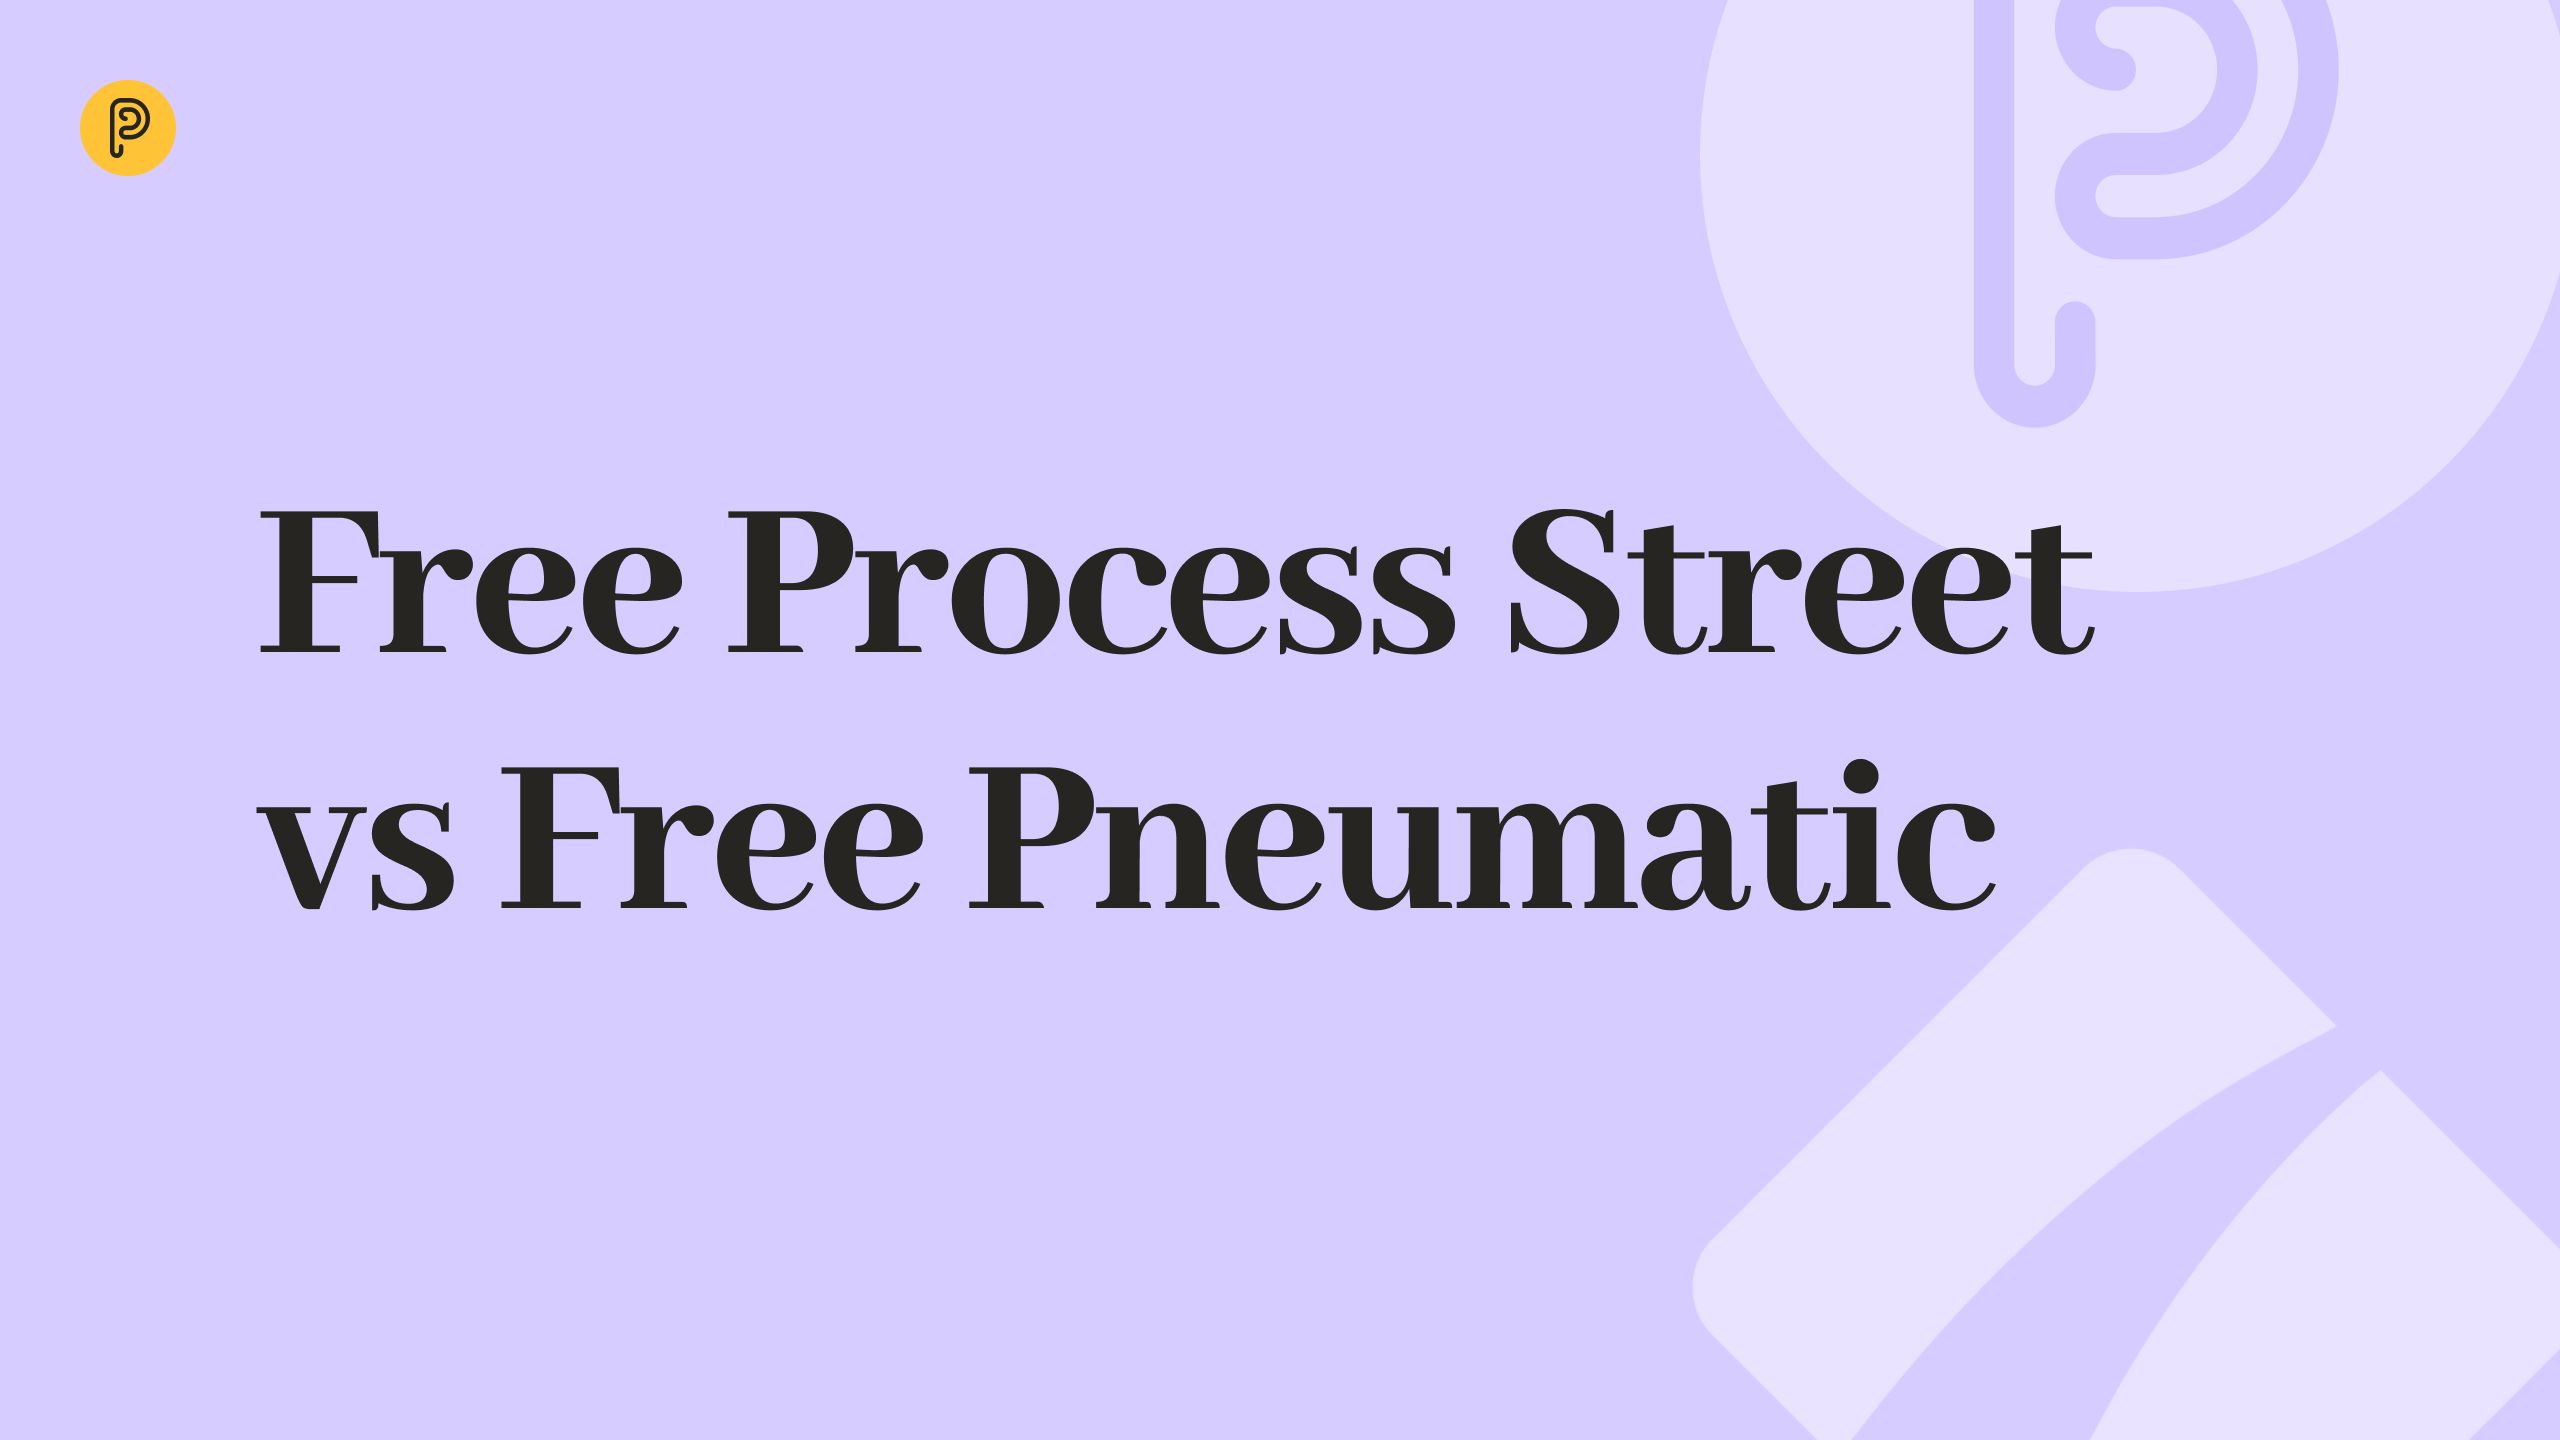 Free Pneumatic vs Free Process Street